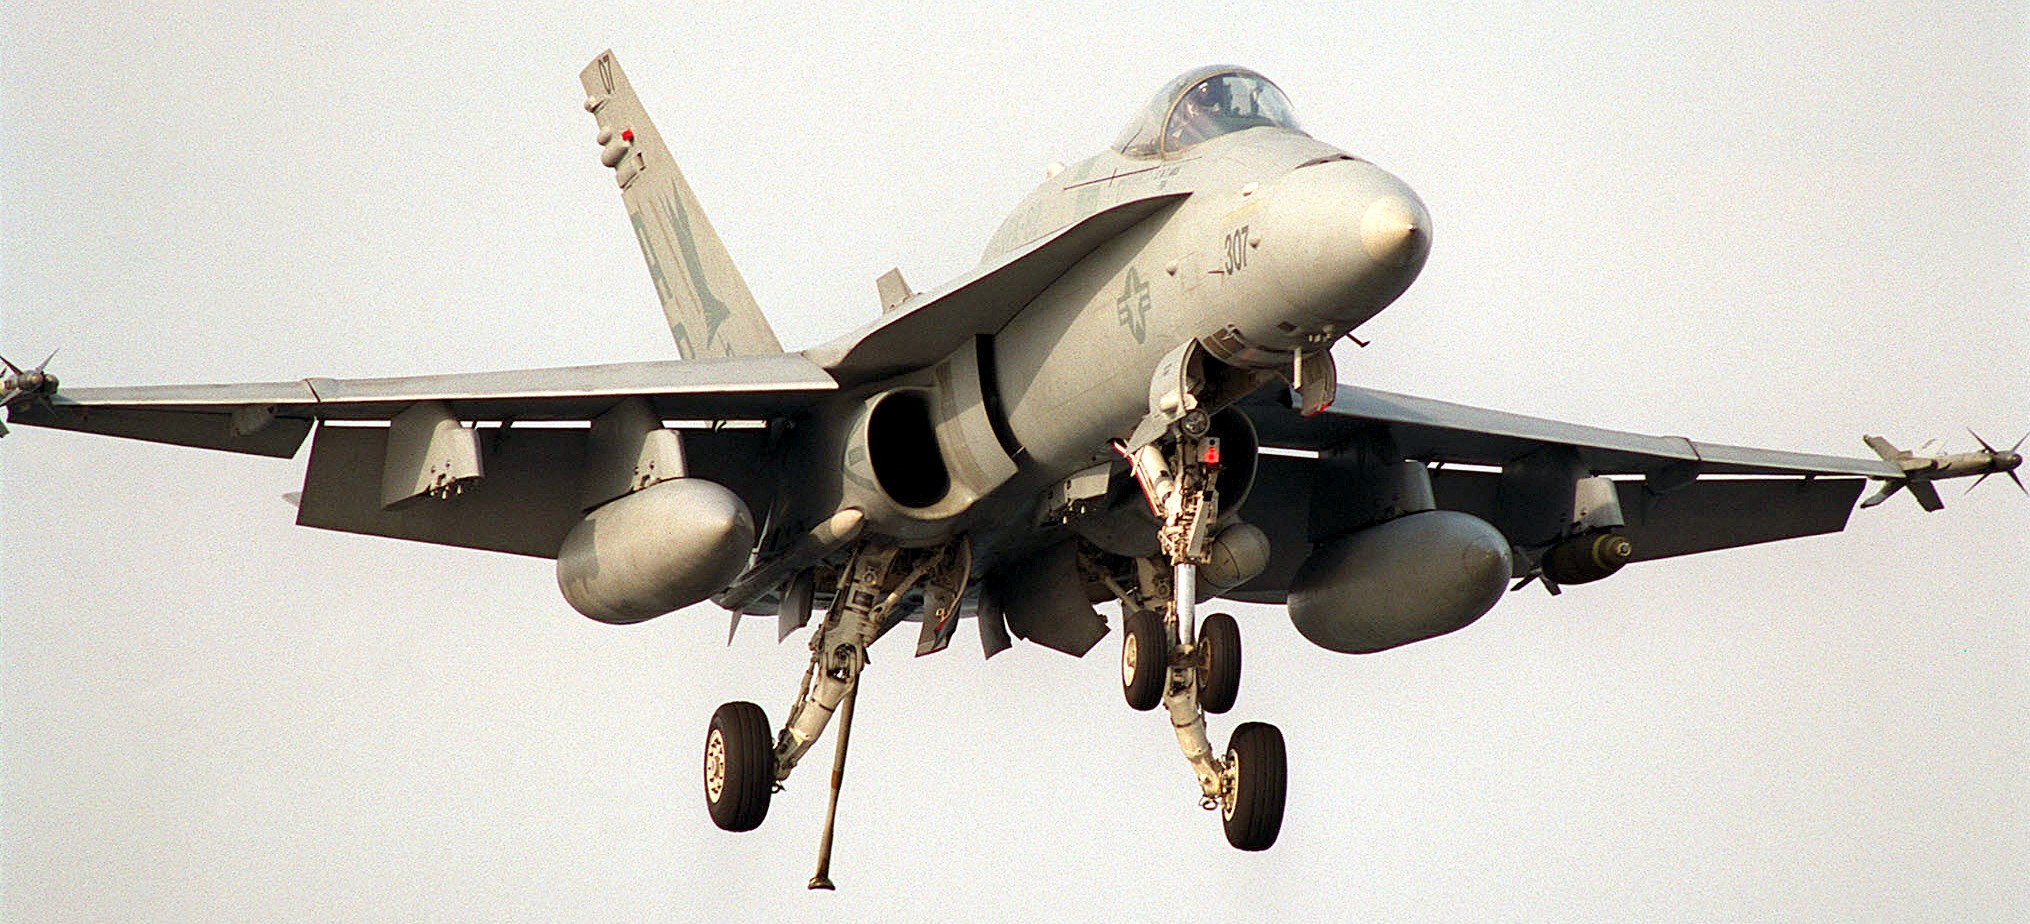 vfa-82 marauders strike fighter squadron f/a-18c hornet cvw-1 uss george washington cvn-73 11